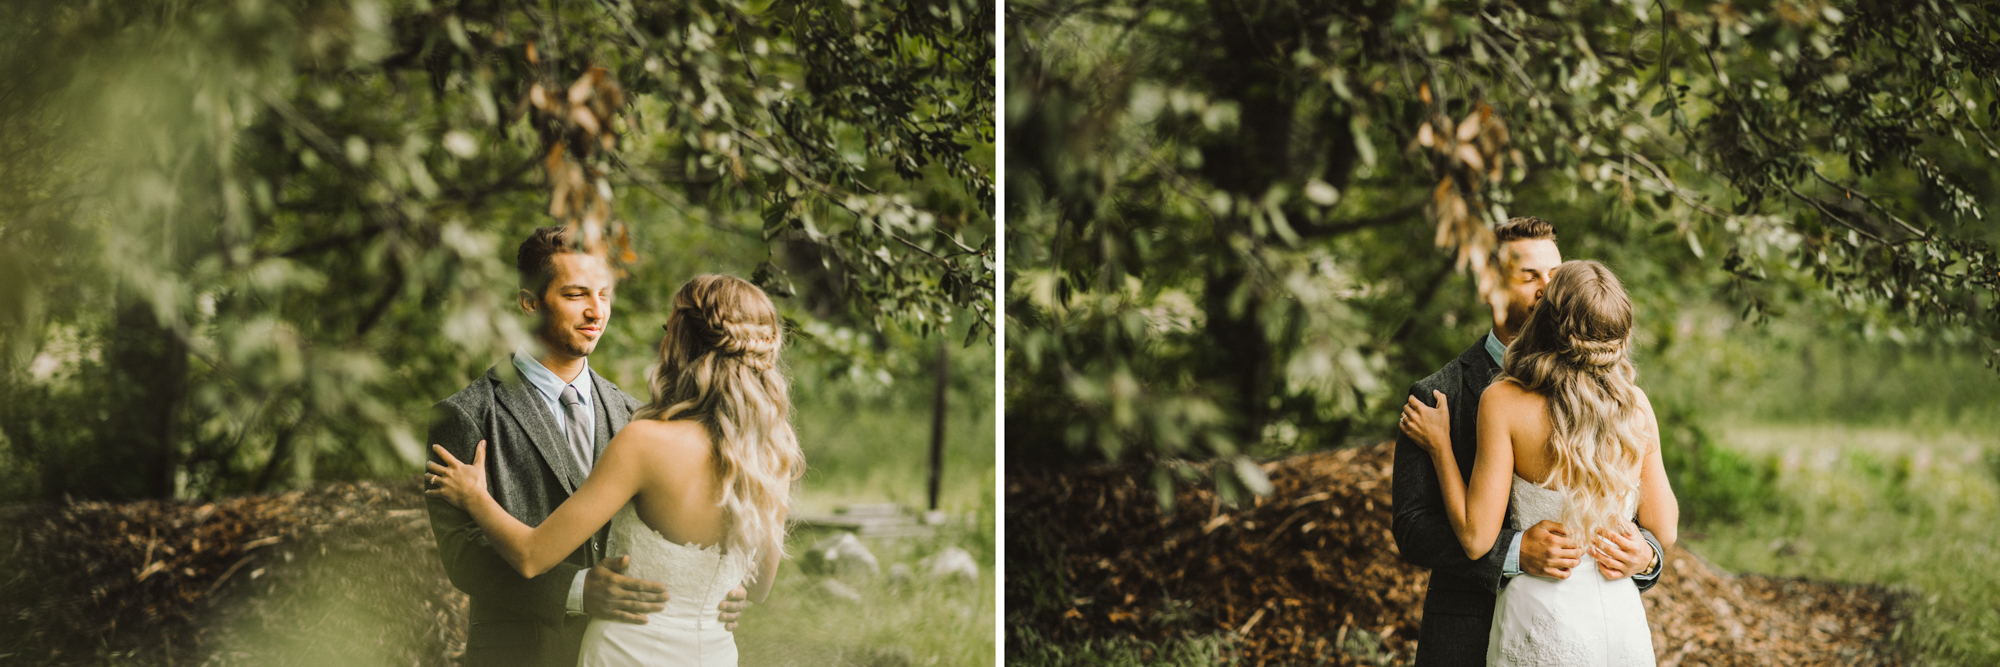 Isaiah & Taylor Photography - Los Angeles - Destination Wedding Photographers - Oak Glen Wilshire Ranch Foggy Forest Wedding-32.jpg